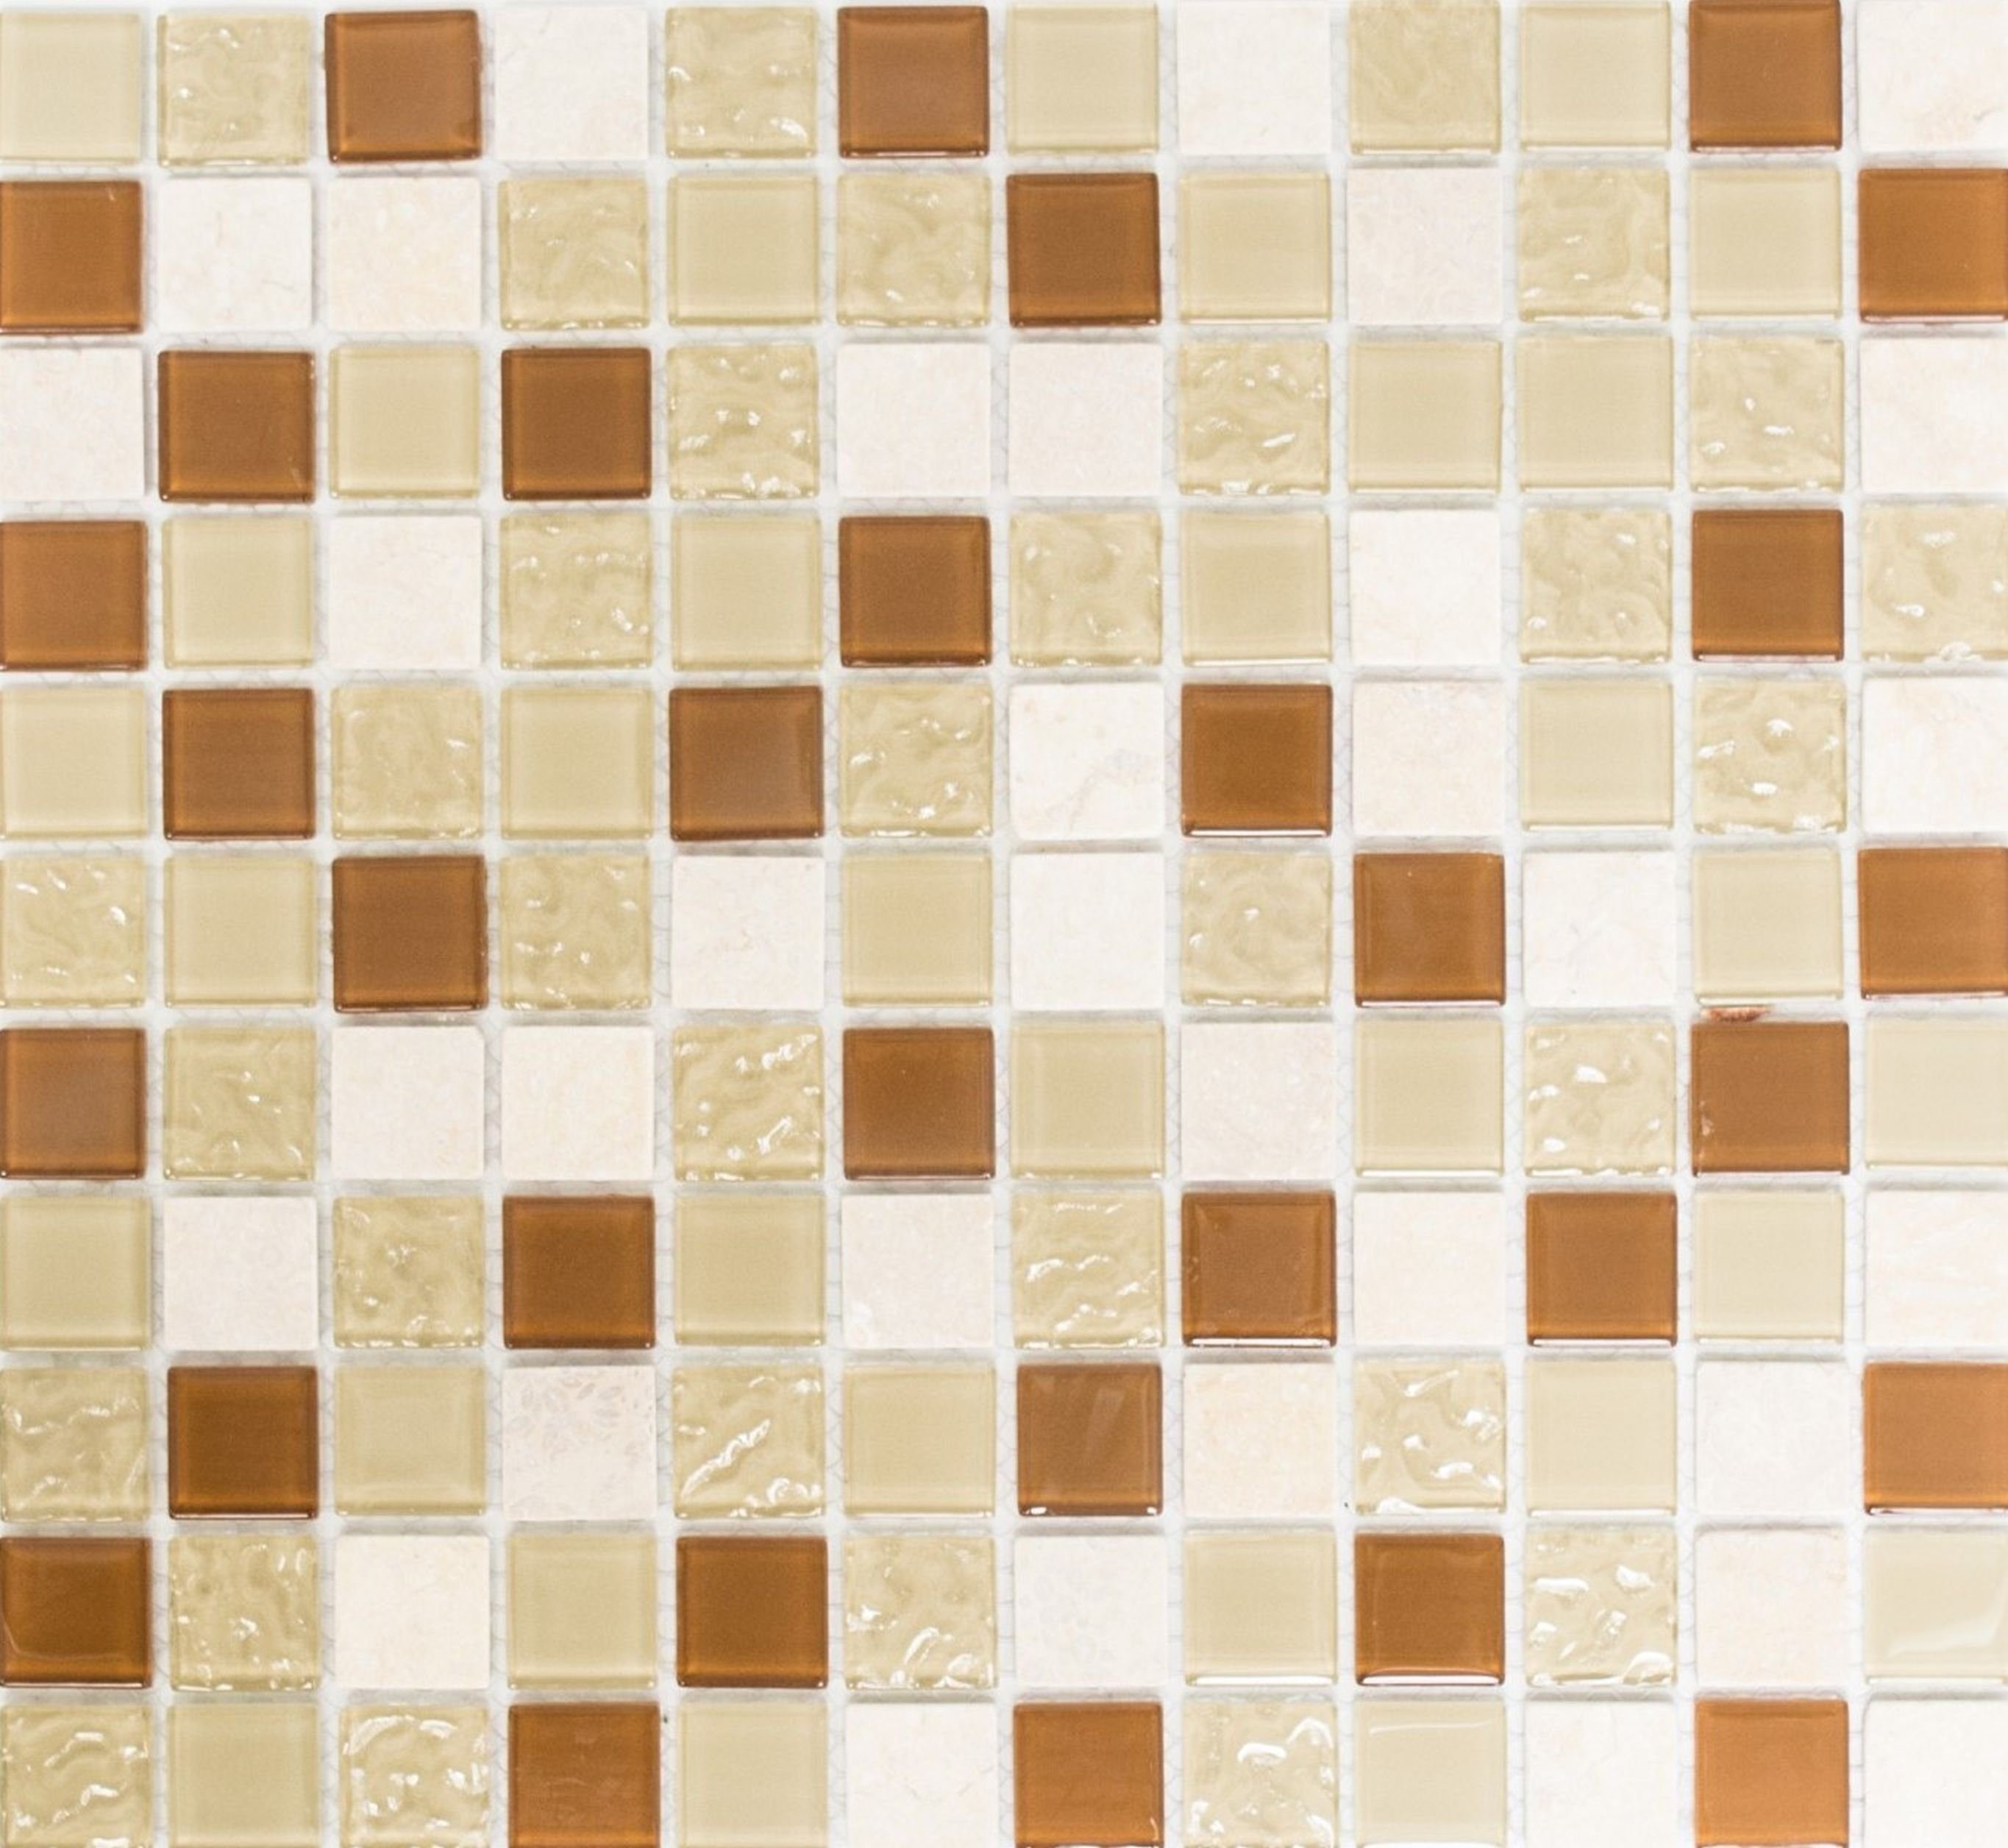 Mosani Mosaikfliesen Glasmosaik Naturstein Marmor Mosaik Rustikal beige